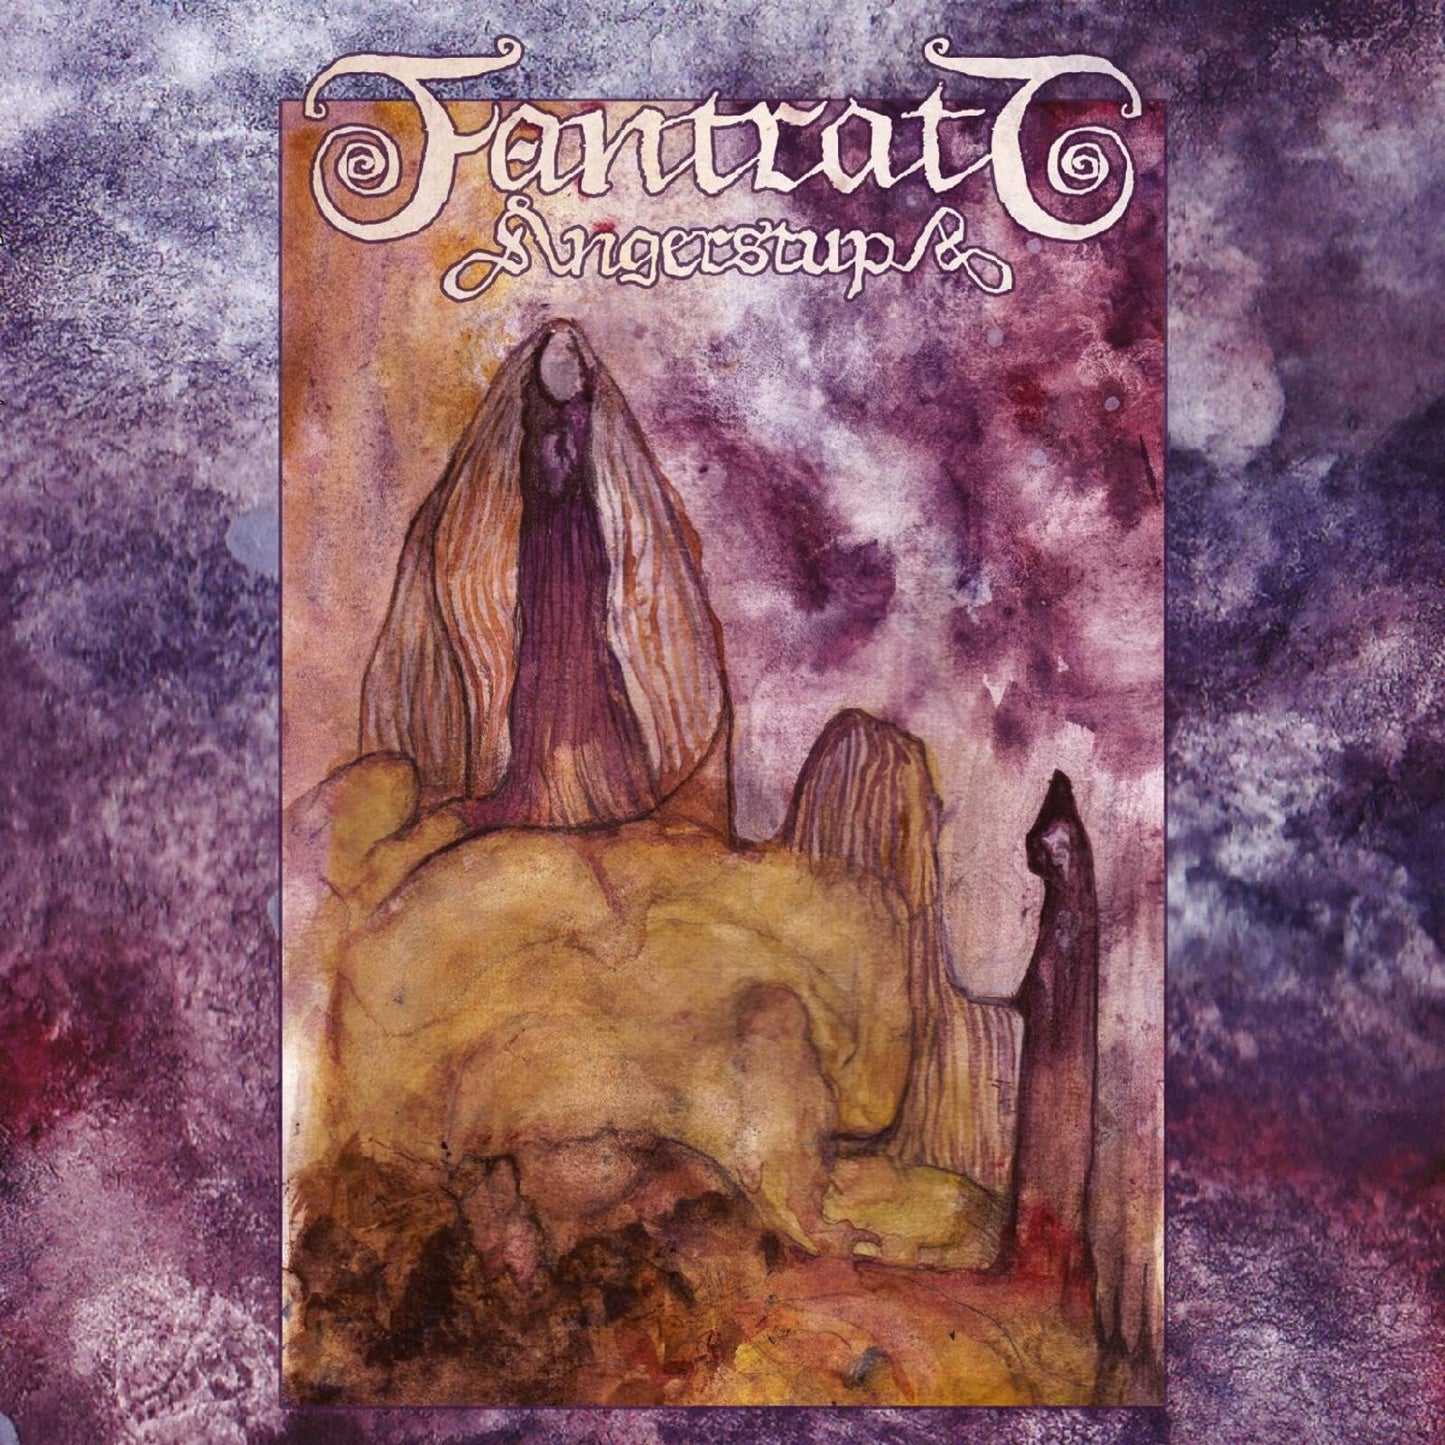 Fantratt - Angerstupa - Import CD Digipak